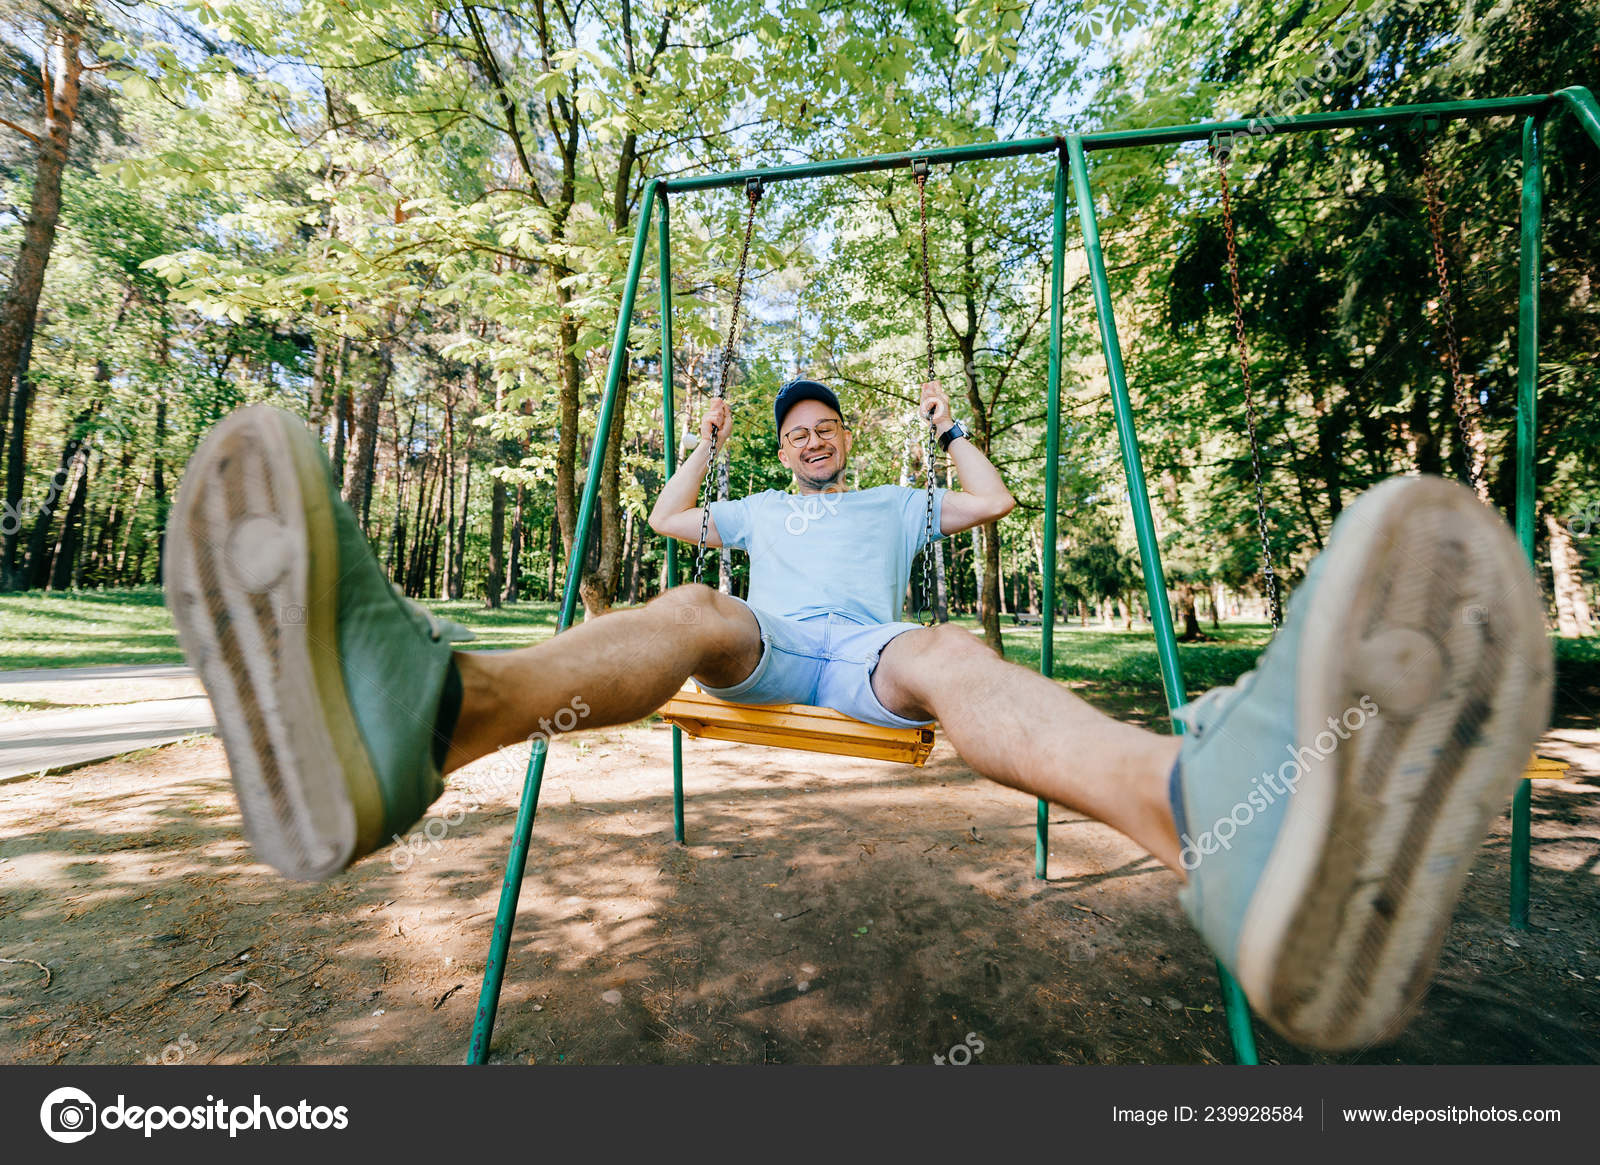 Adult swinging